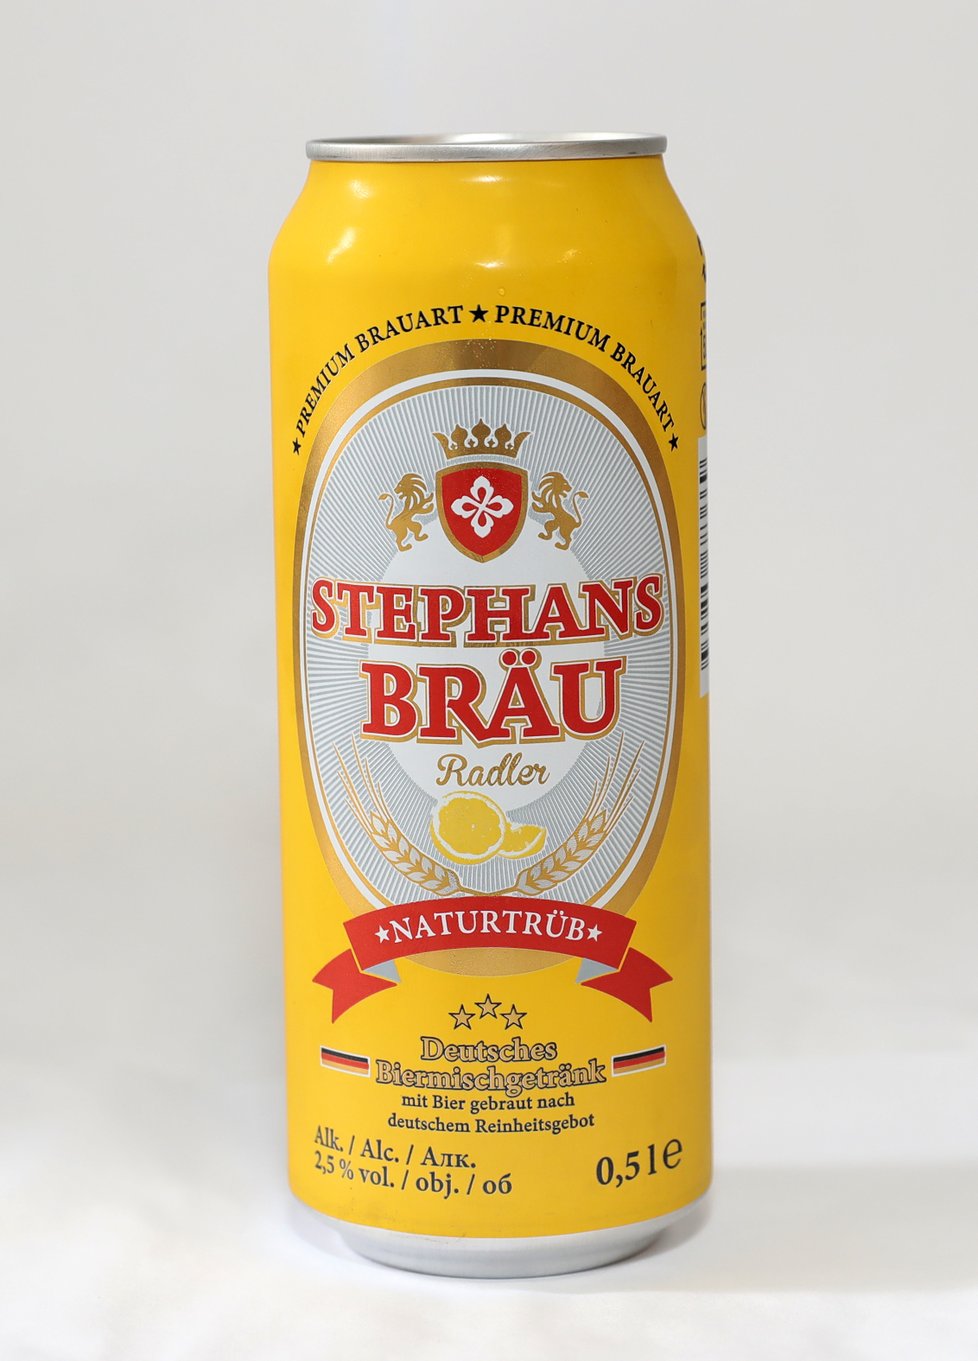 Stephans Bräu